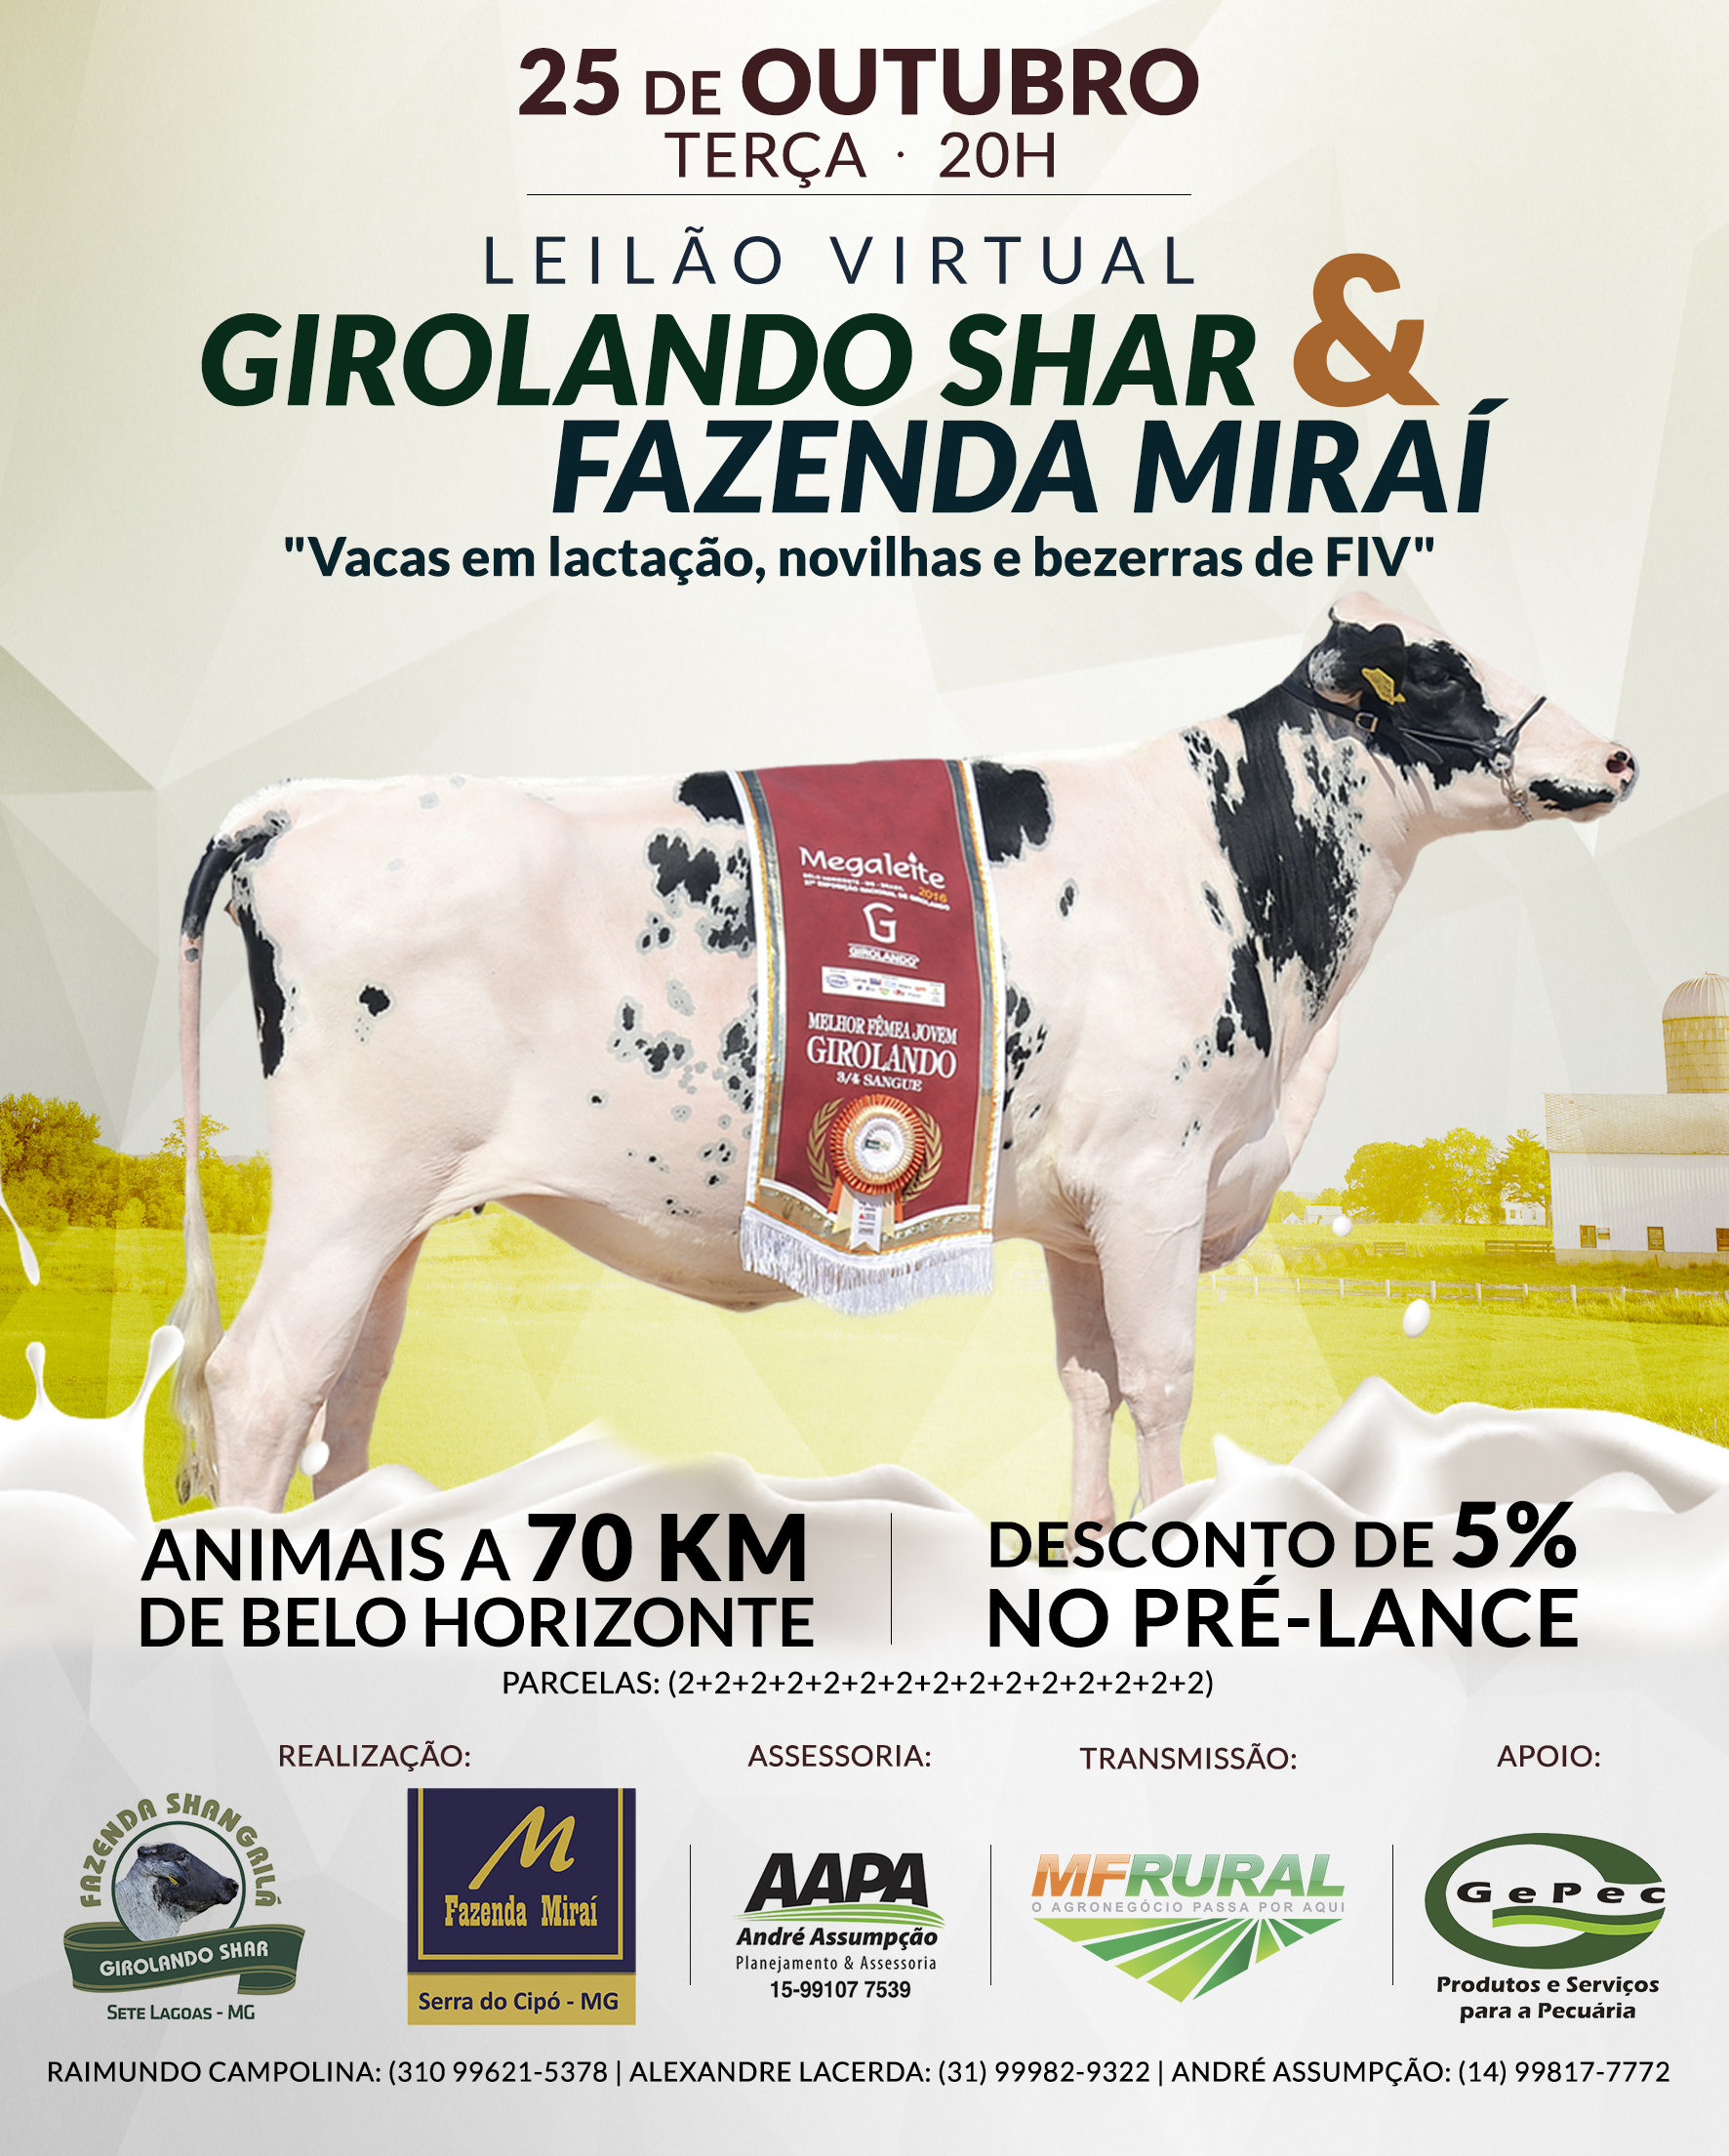 Leilão Virtual Girolando Shar & Fazenda Miraí